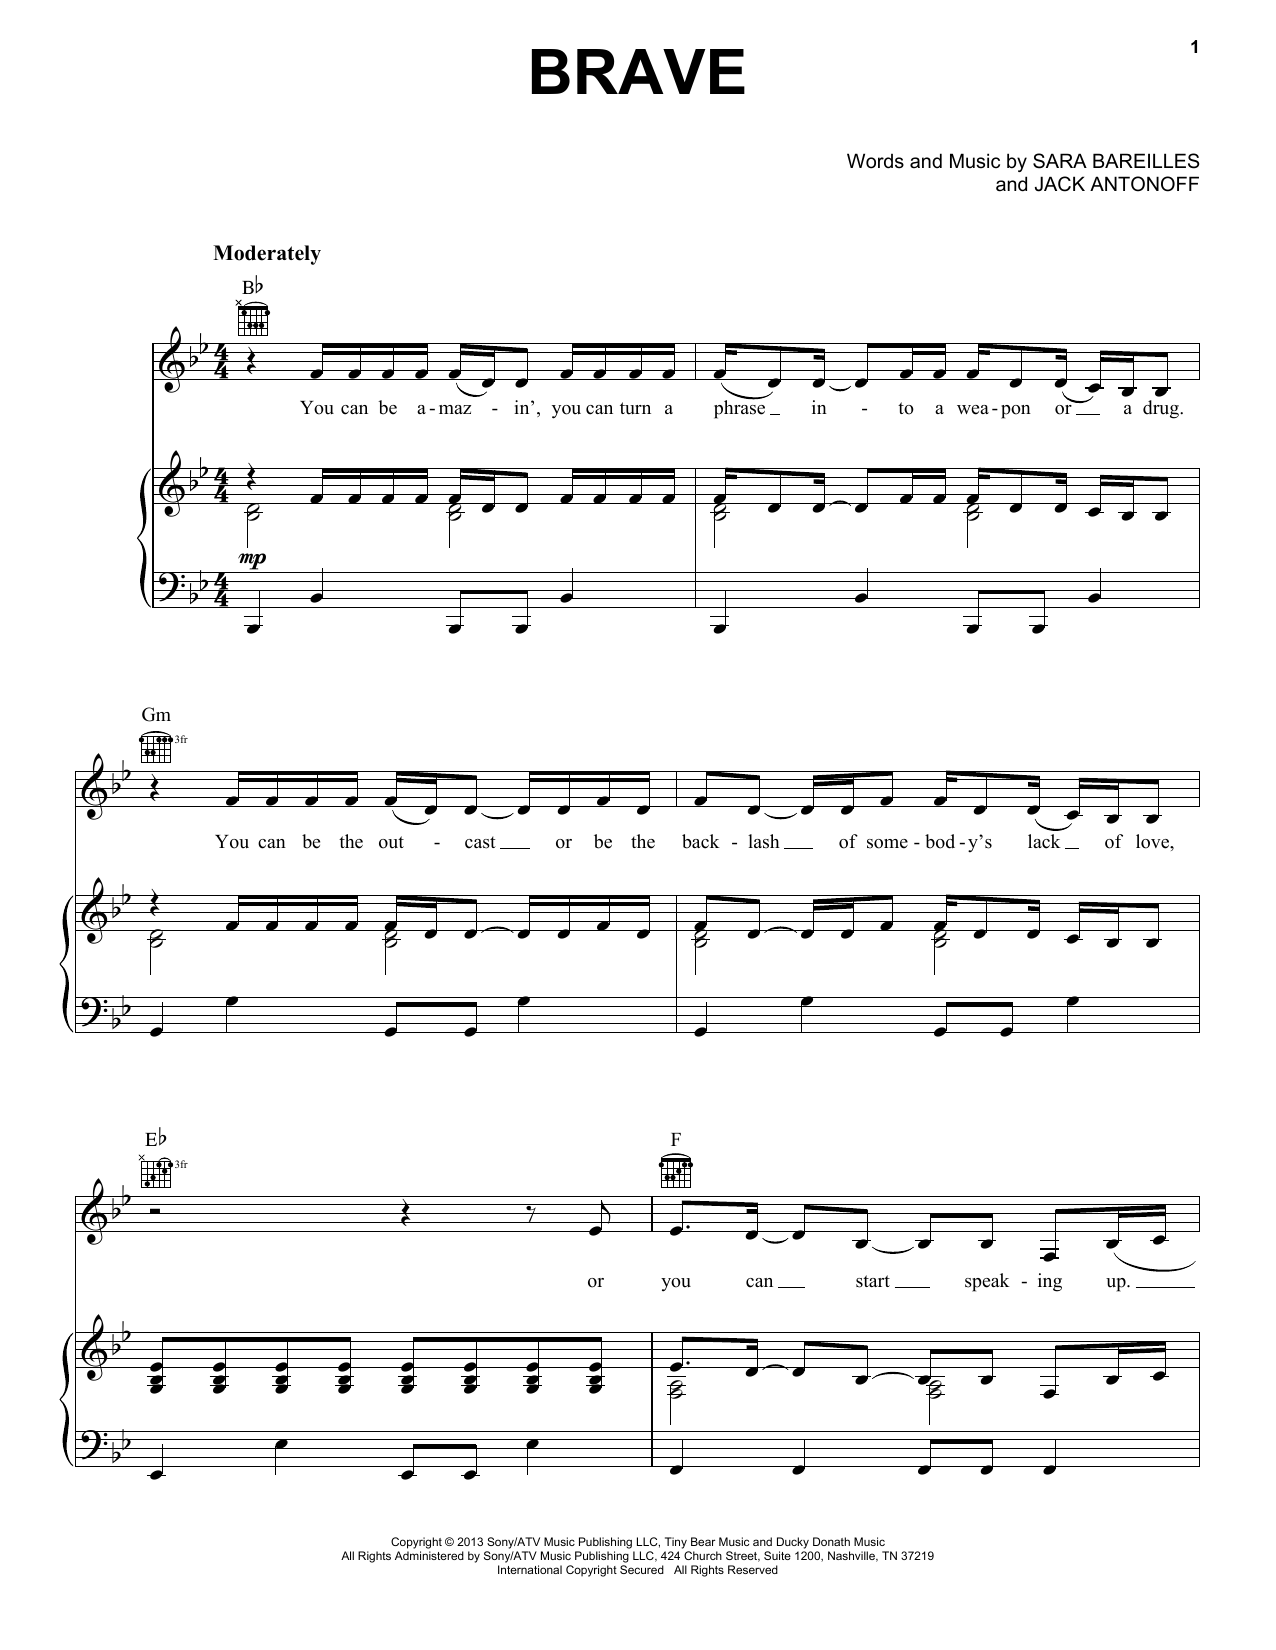 Sara Bareilles Brave Sheet Music Notes & Chords for VLNDT - Download or Print PDF